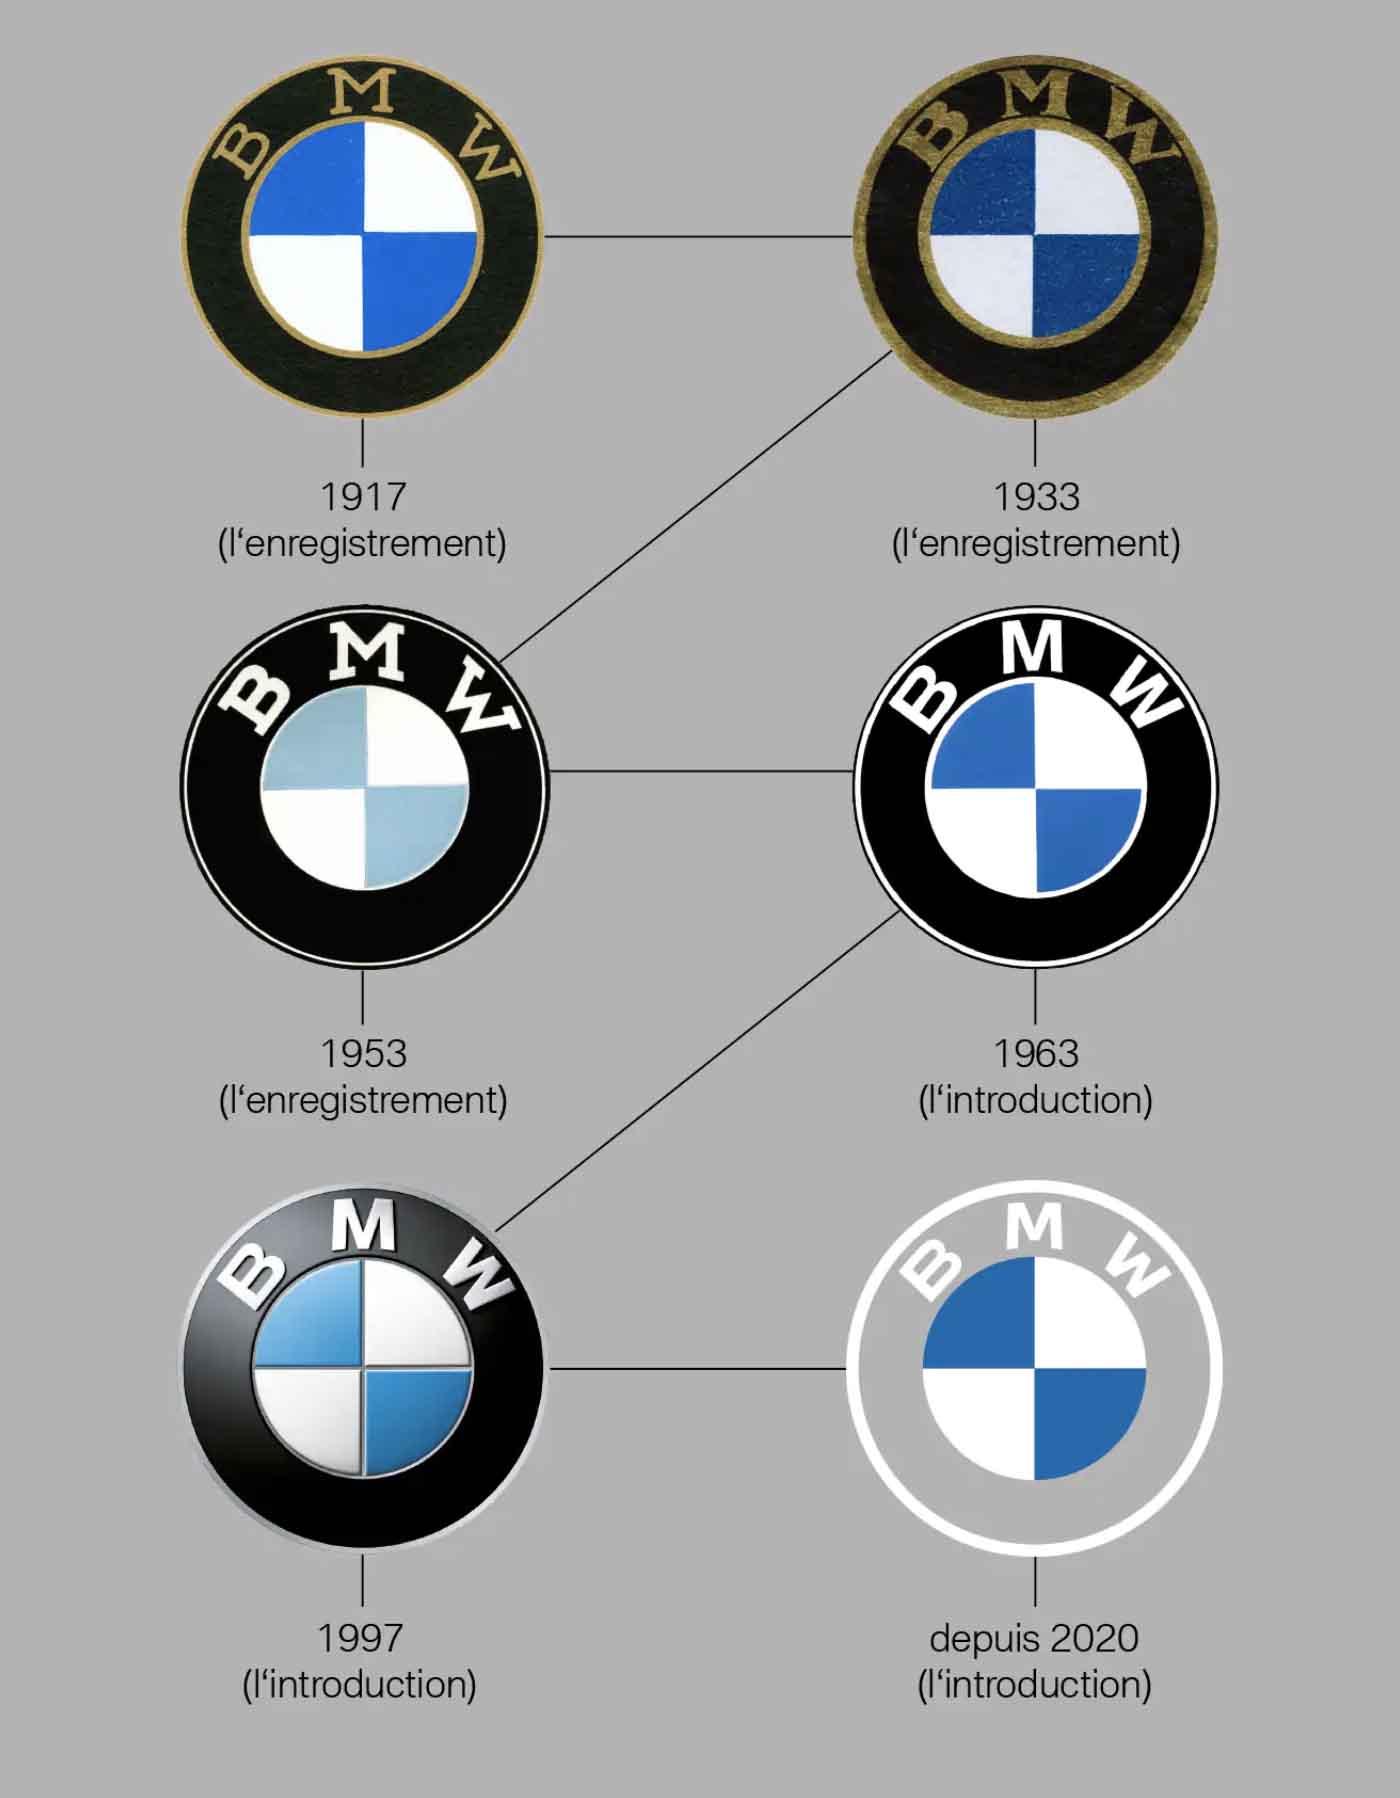 nouveau logo BMW 2020 flat design